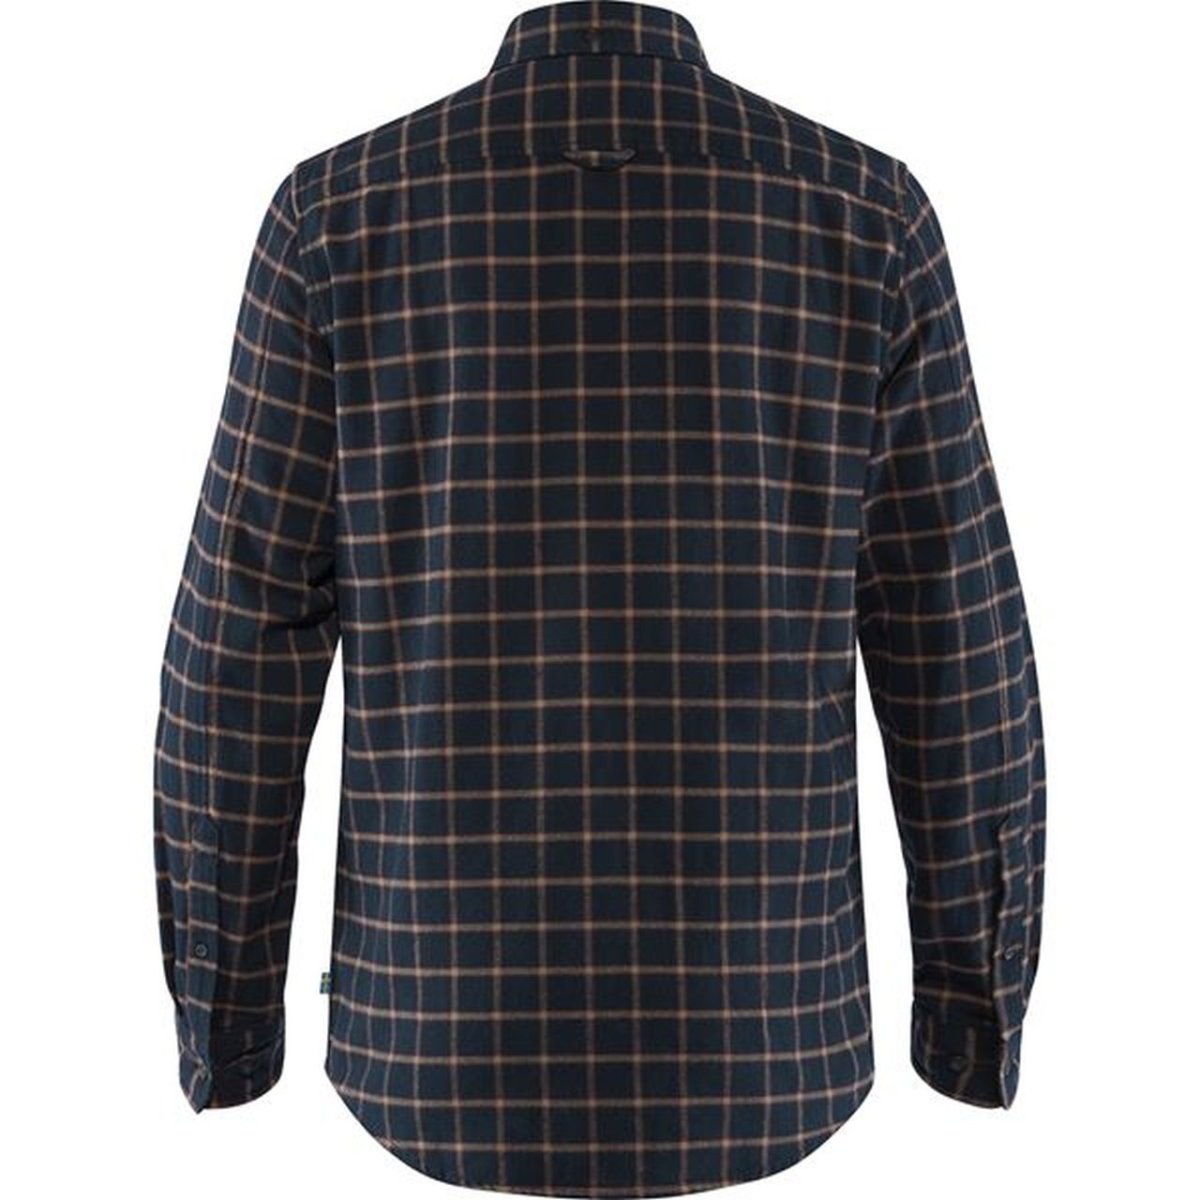 Fj&auml;llr&auml;ven &Ouml;vik Flannel Shirt  82979 dark navy Herrenhemd Outdoorhemd Hemd